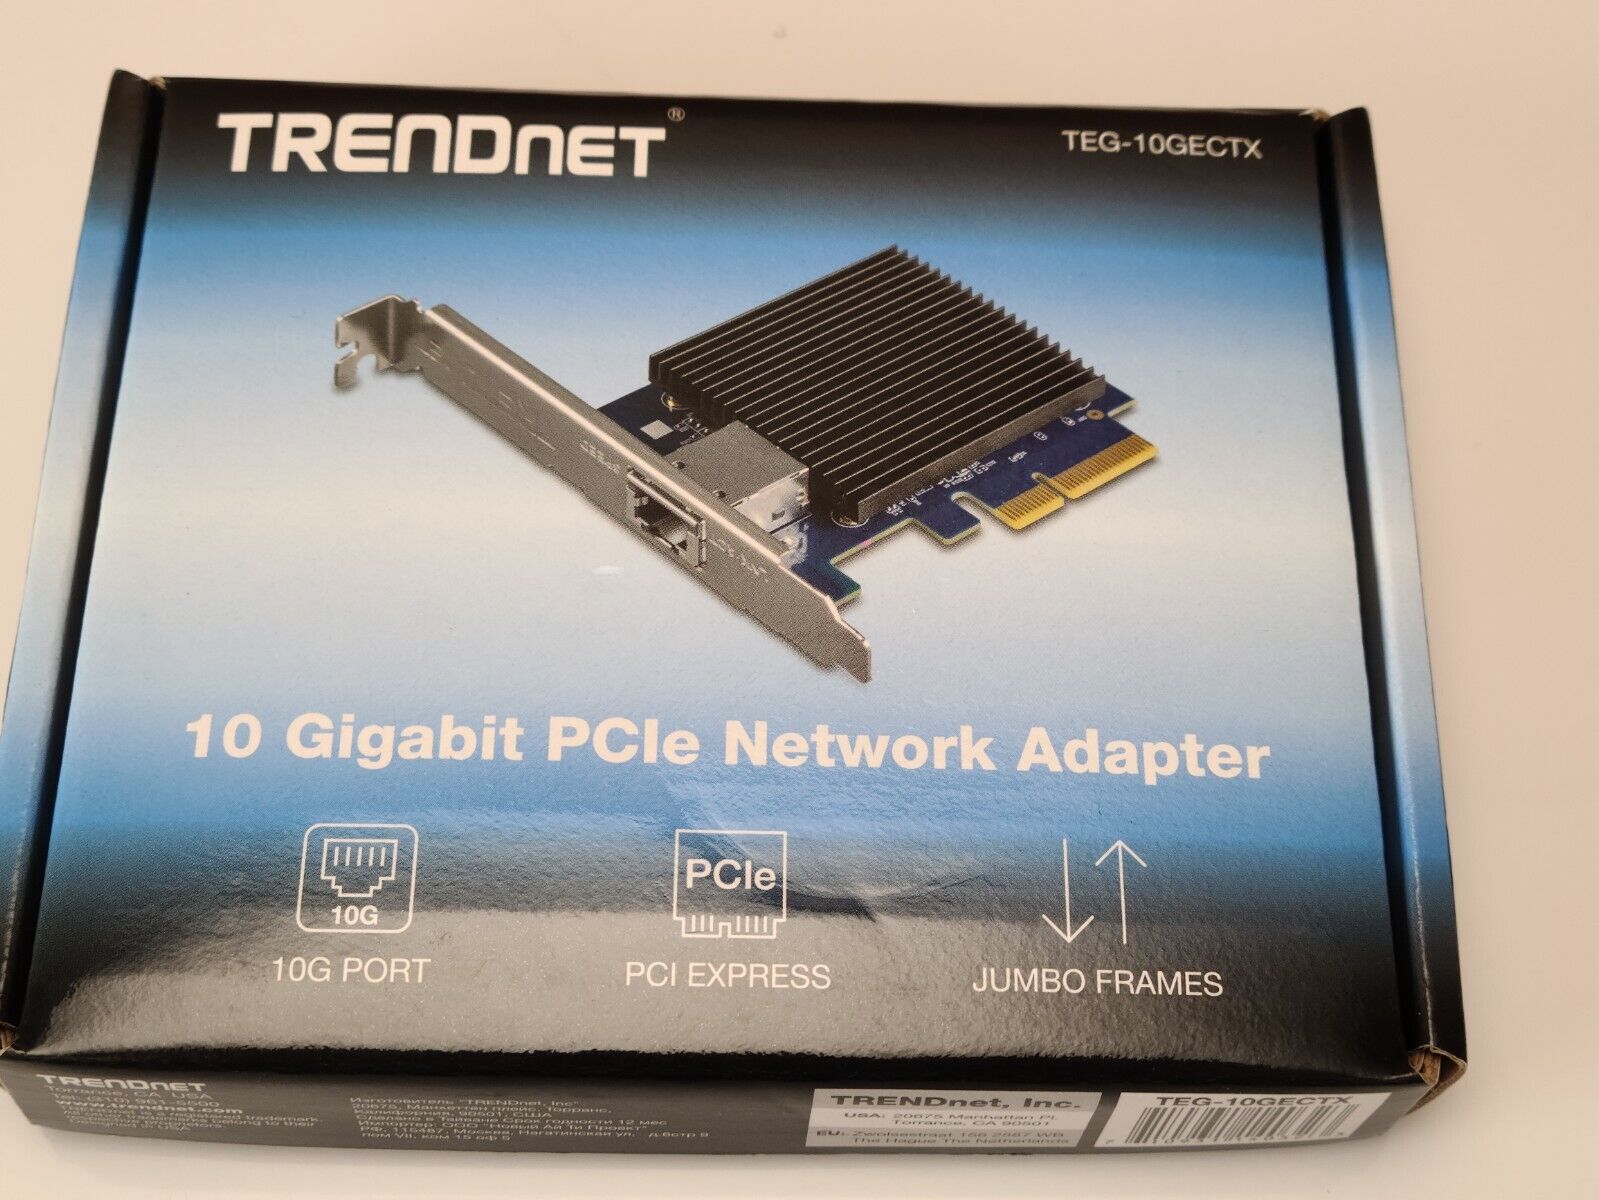 Trendnet TEG-10GECTX 10 Gigabit PCIe Network Adapter